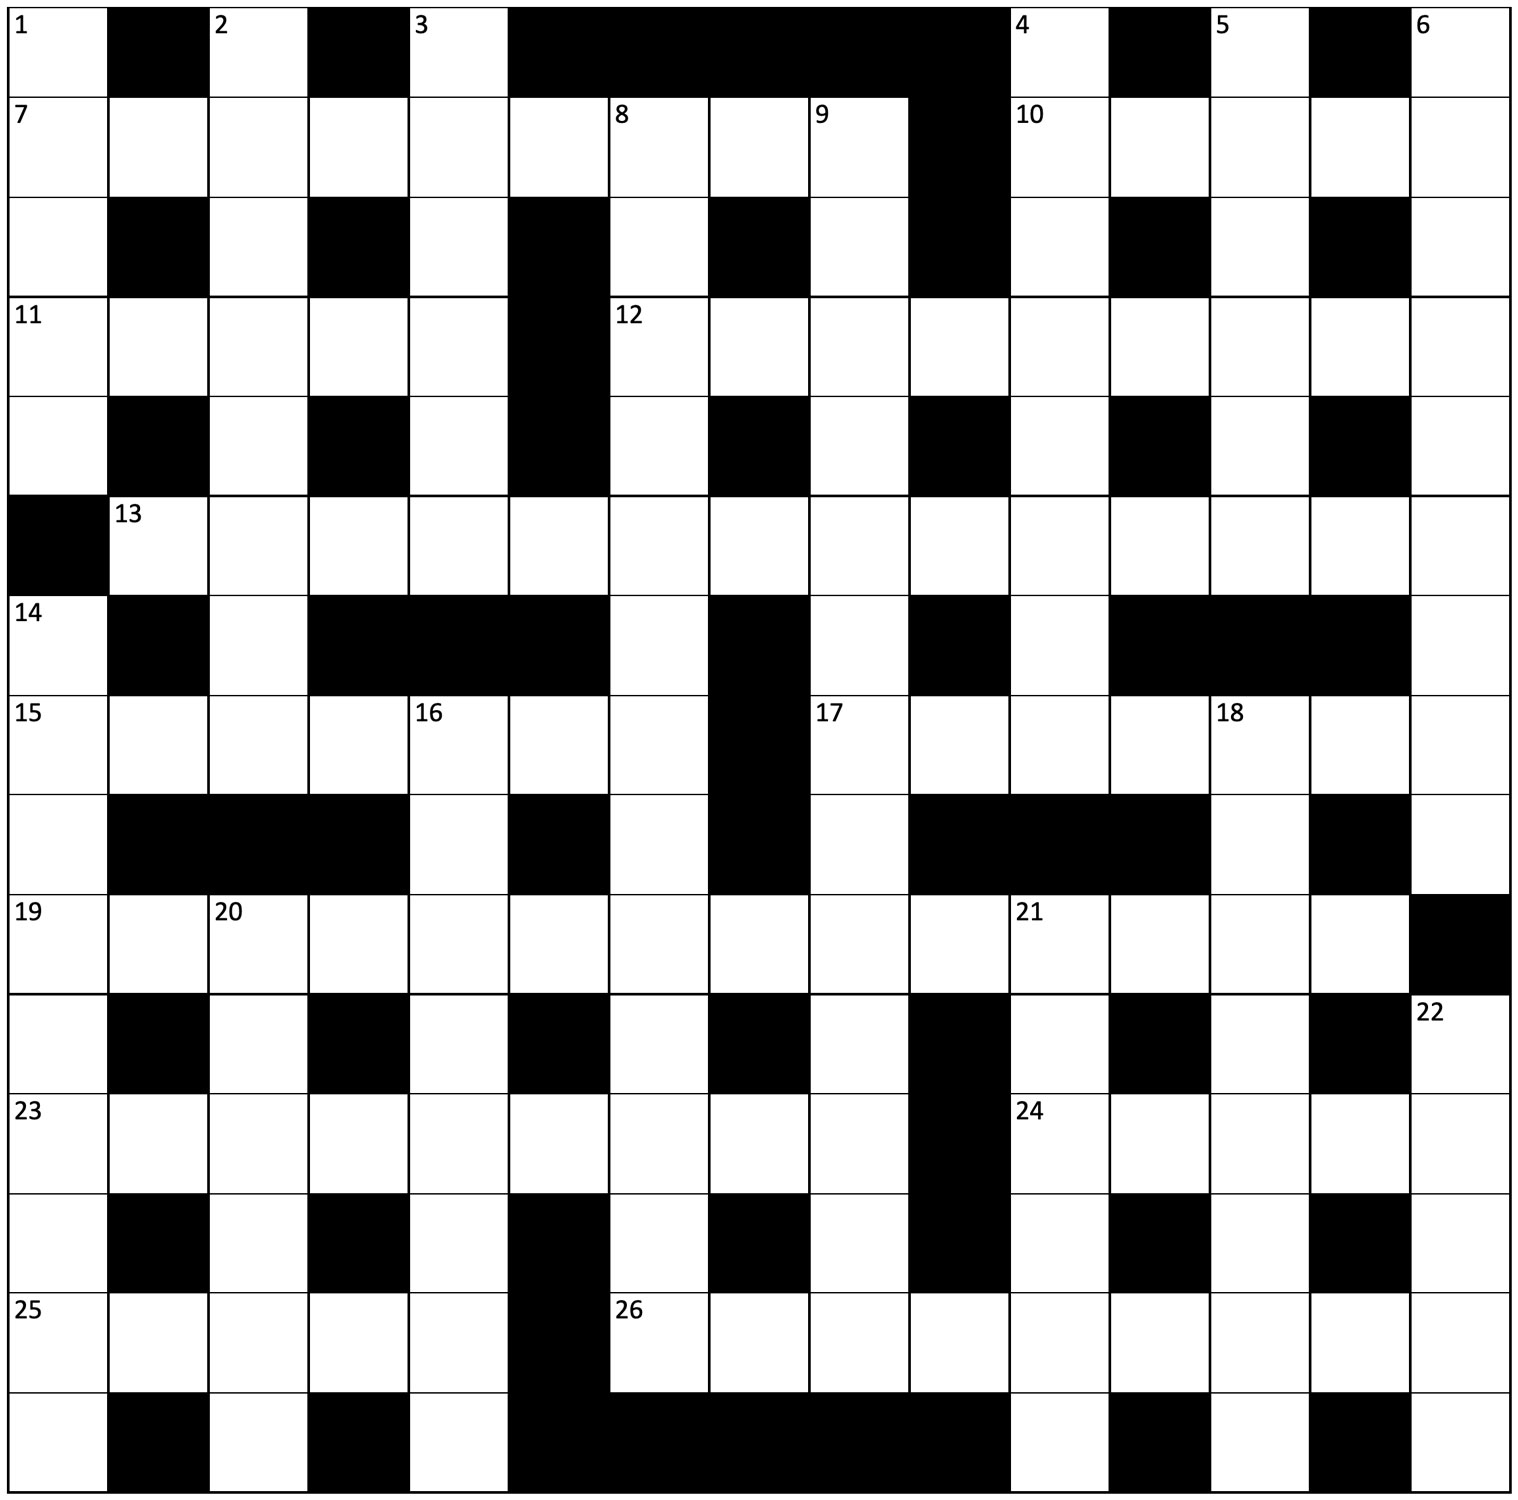 Cryptic crossword No.6